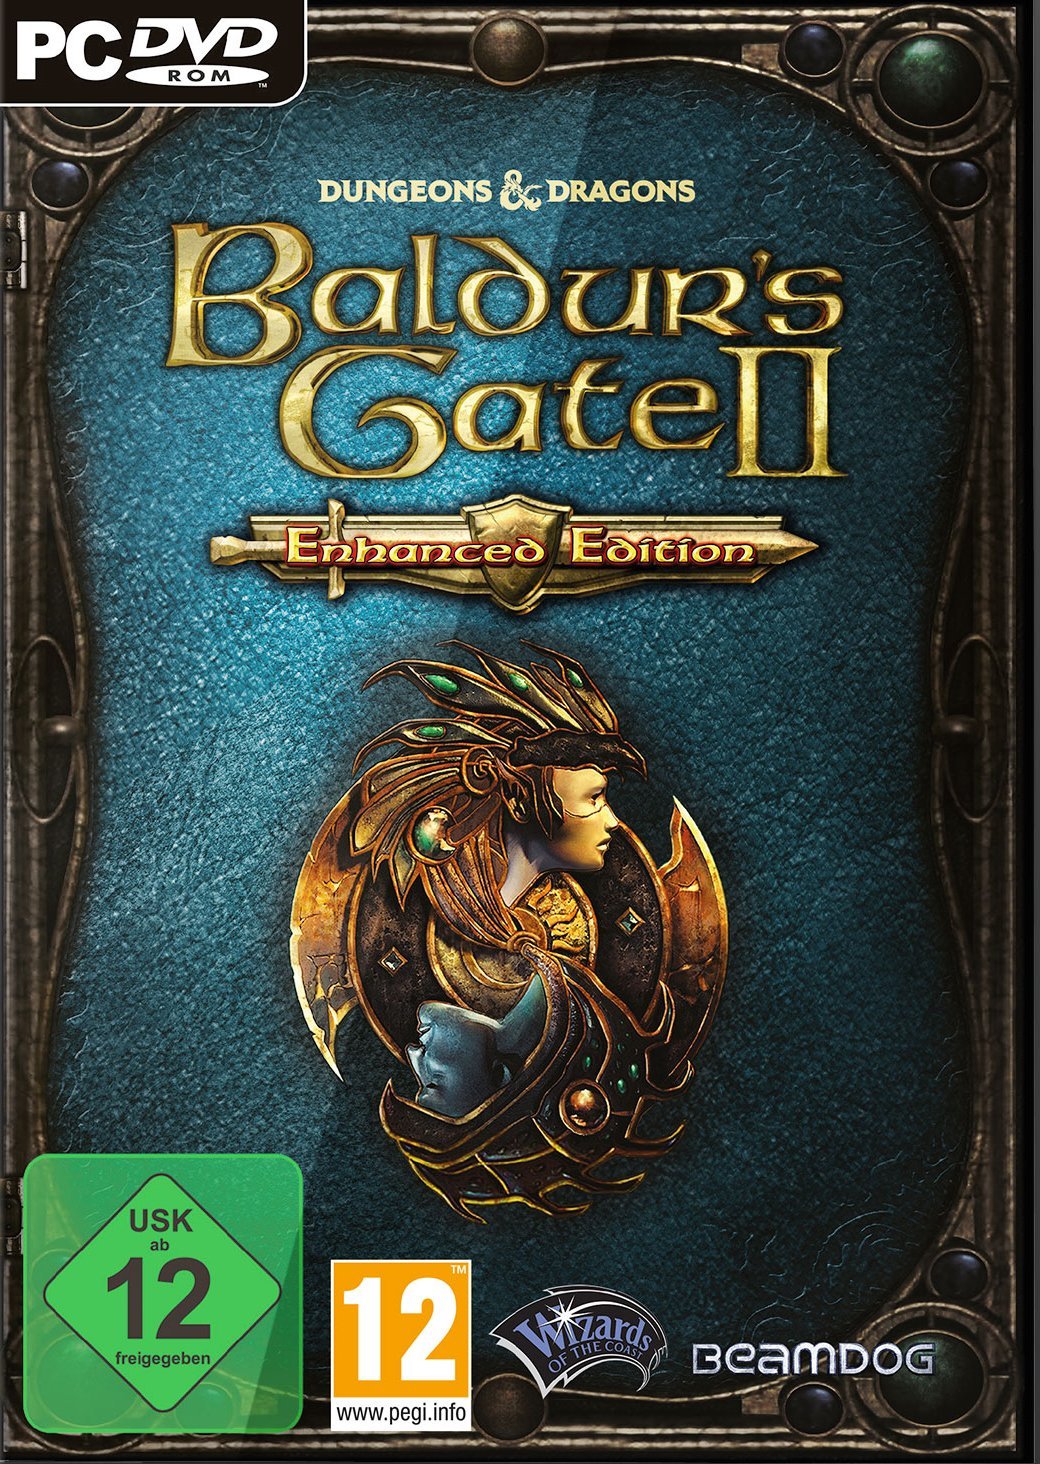 Baldur's Gate II : Enhanced Edition